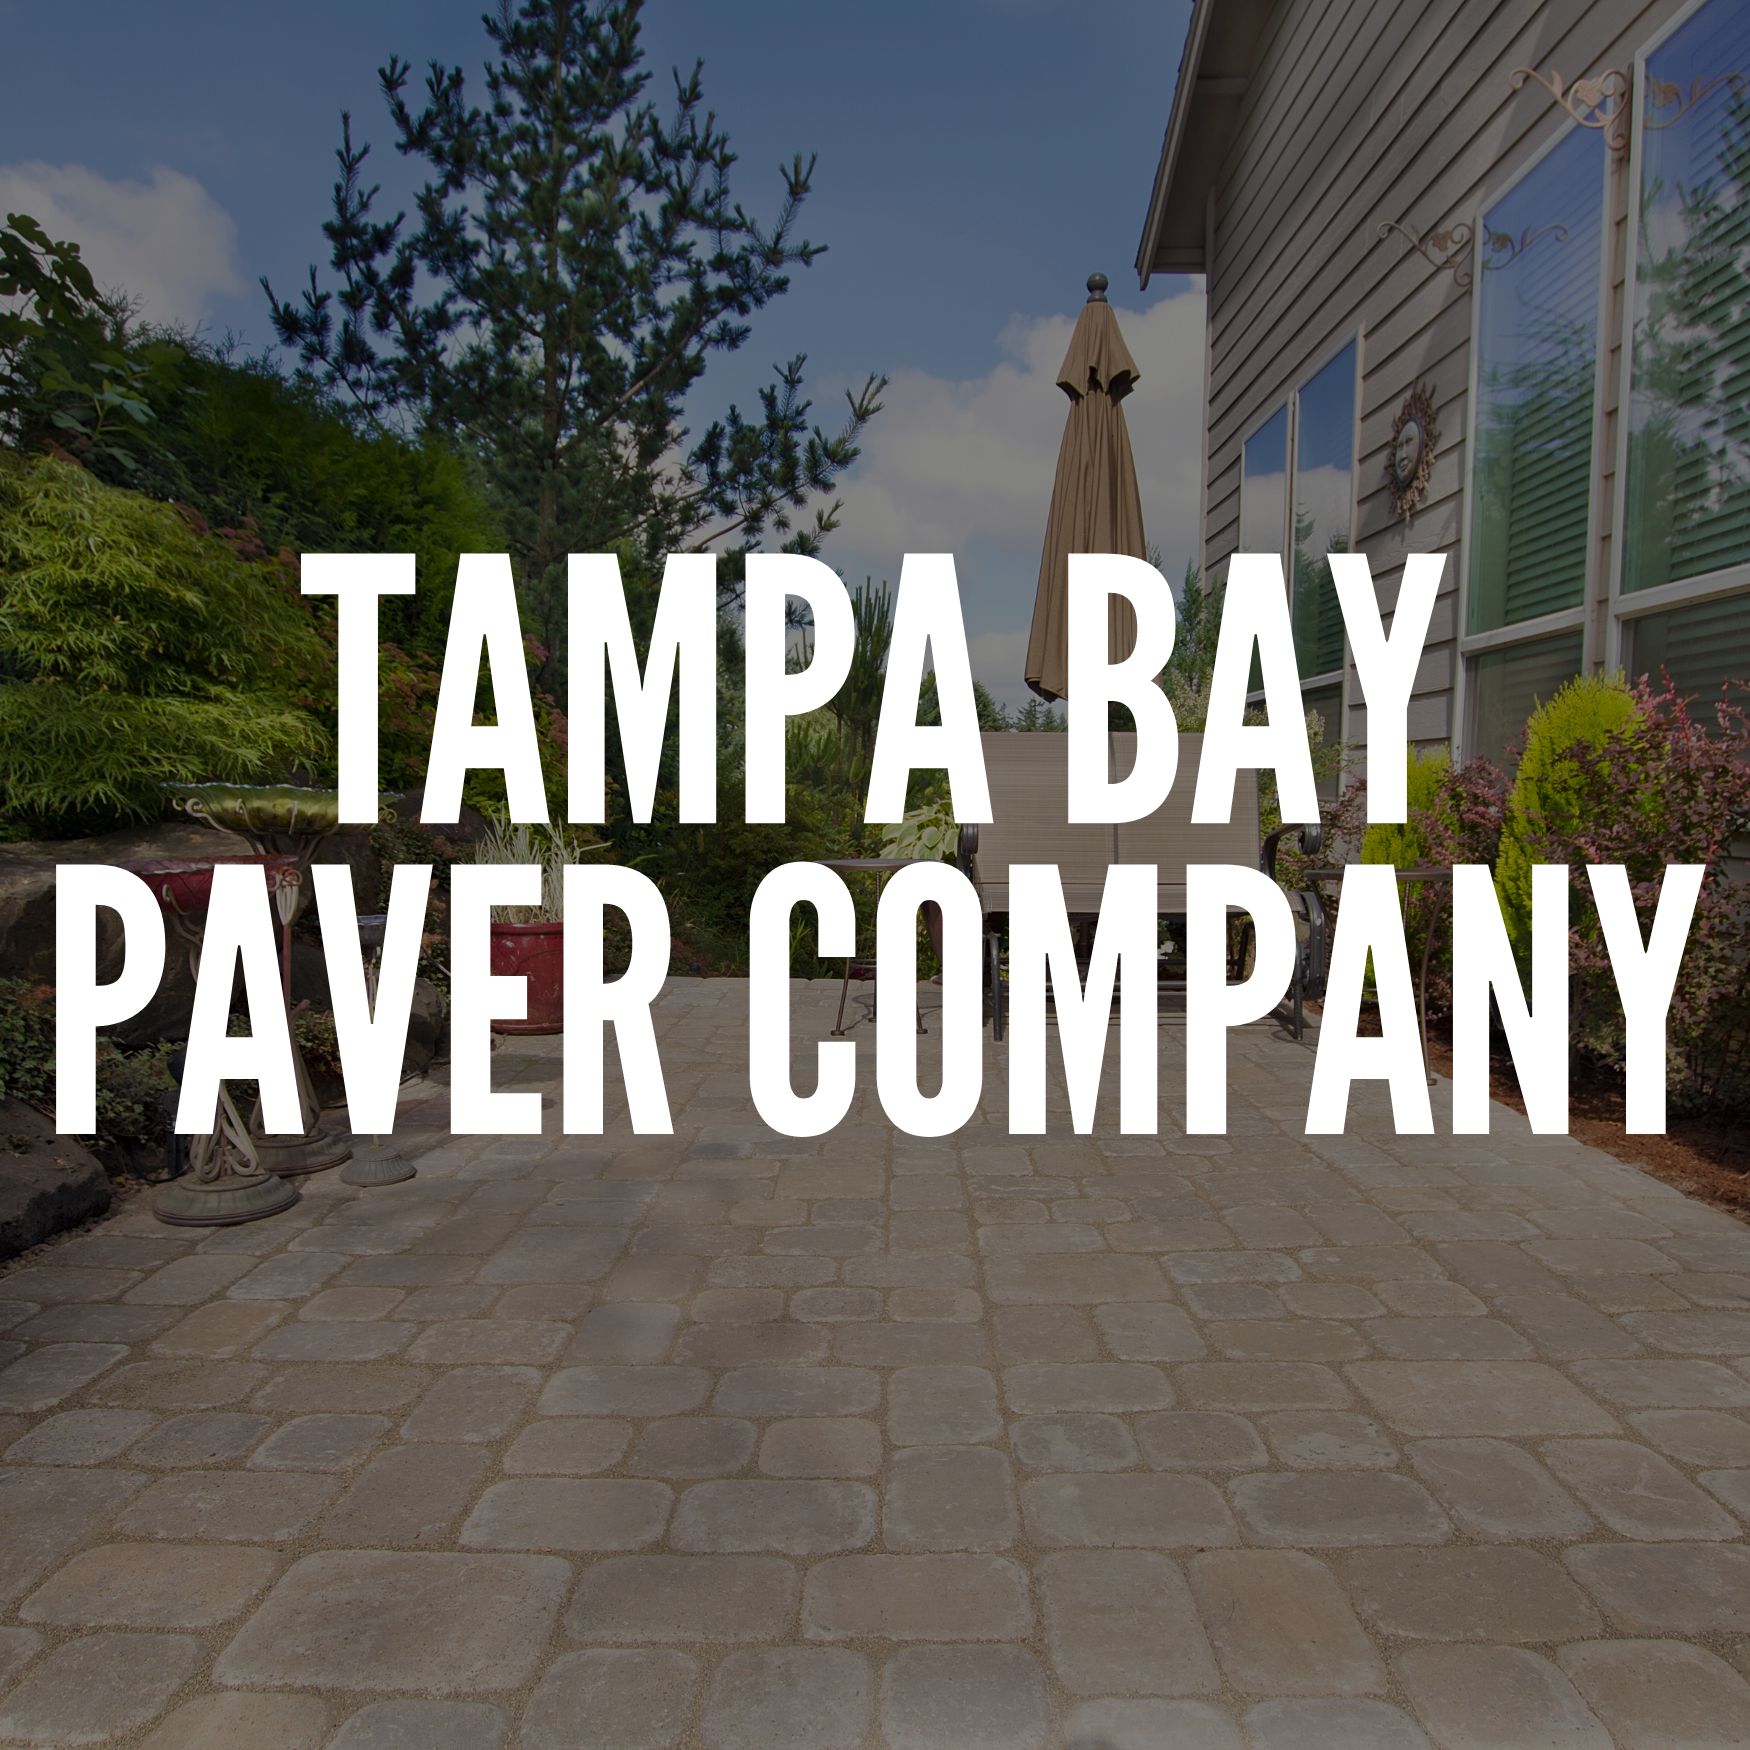 Tampa Bay PAver Company